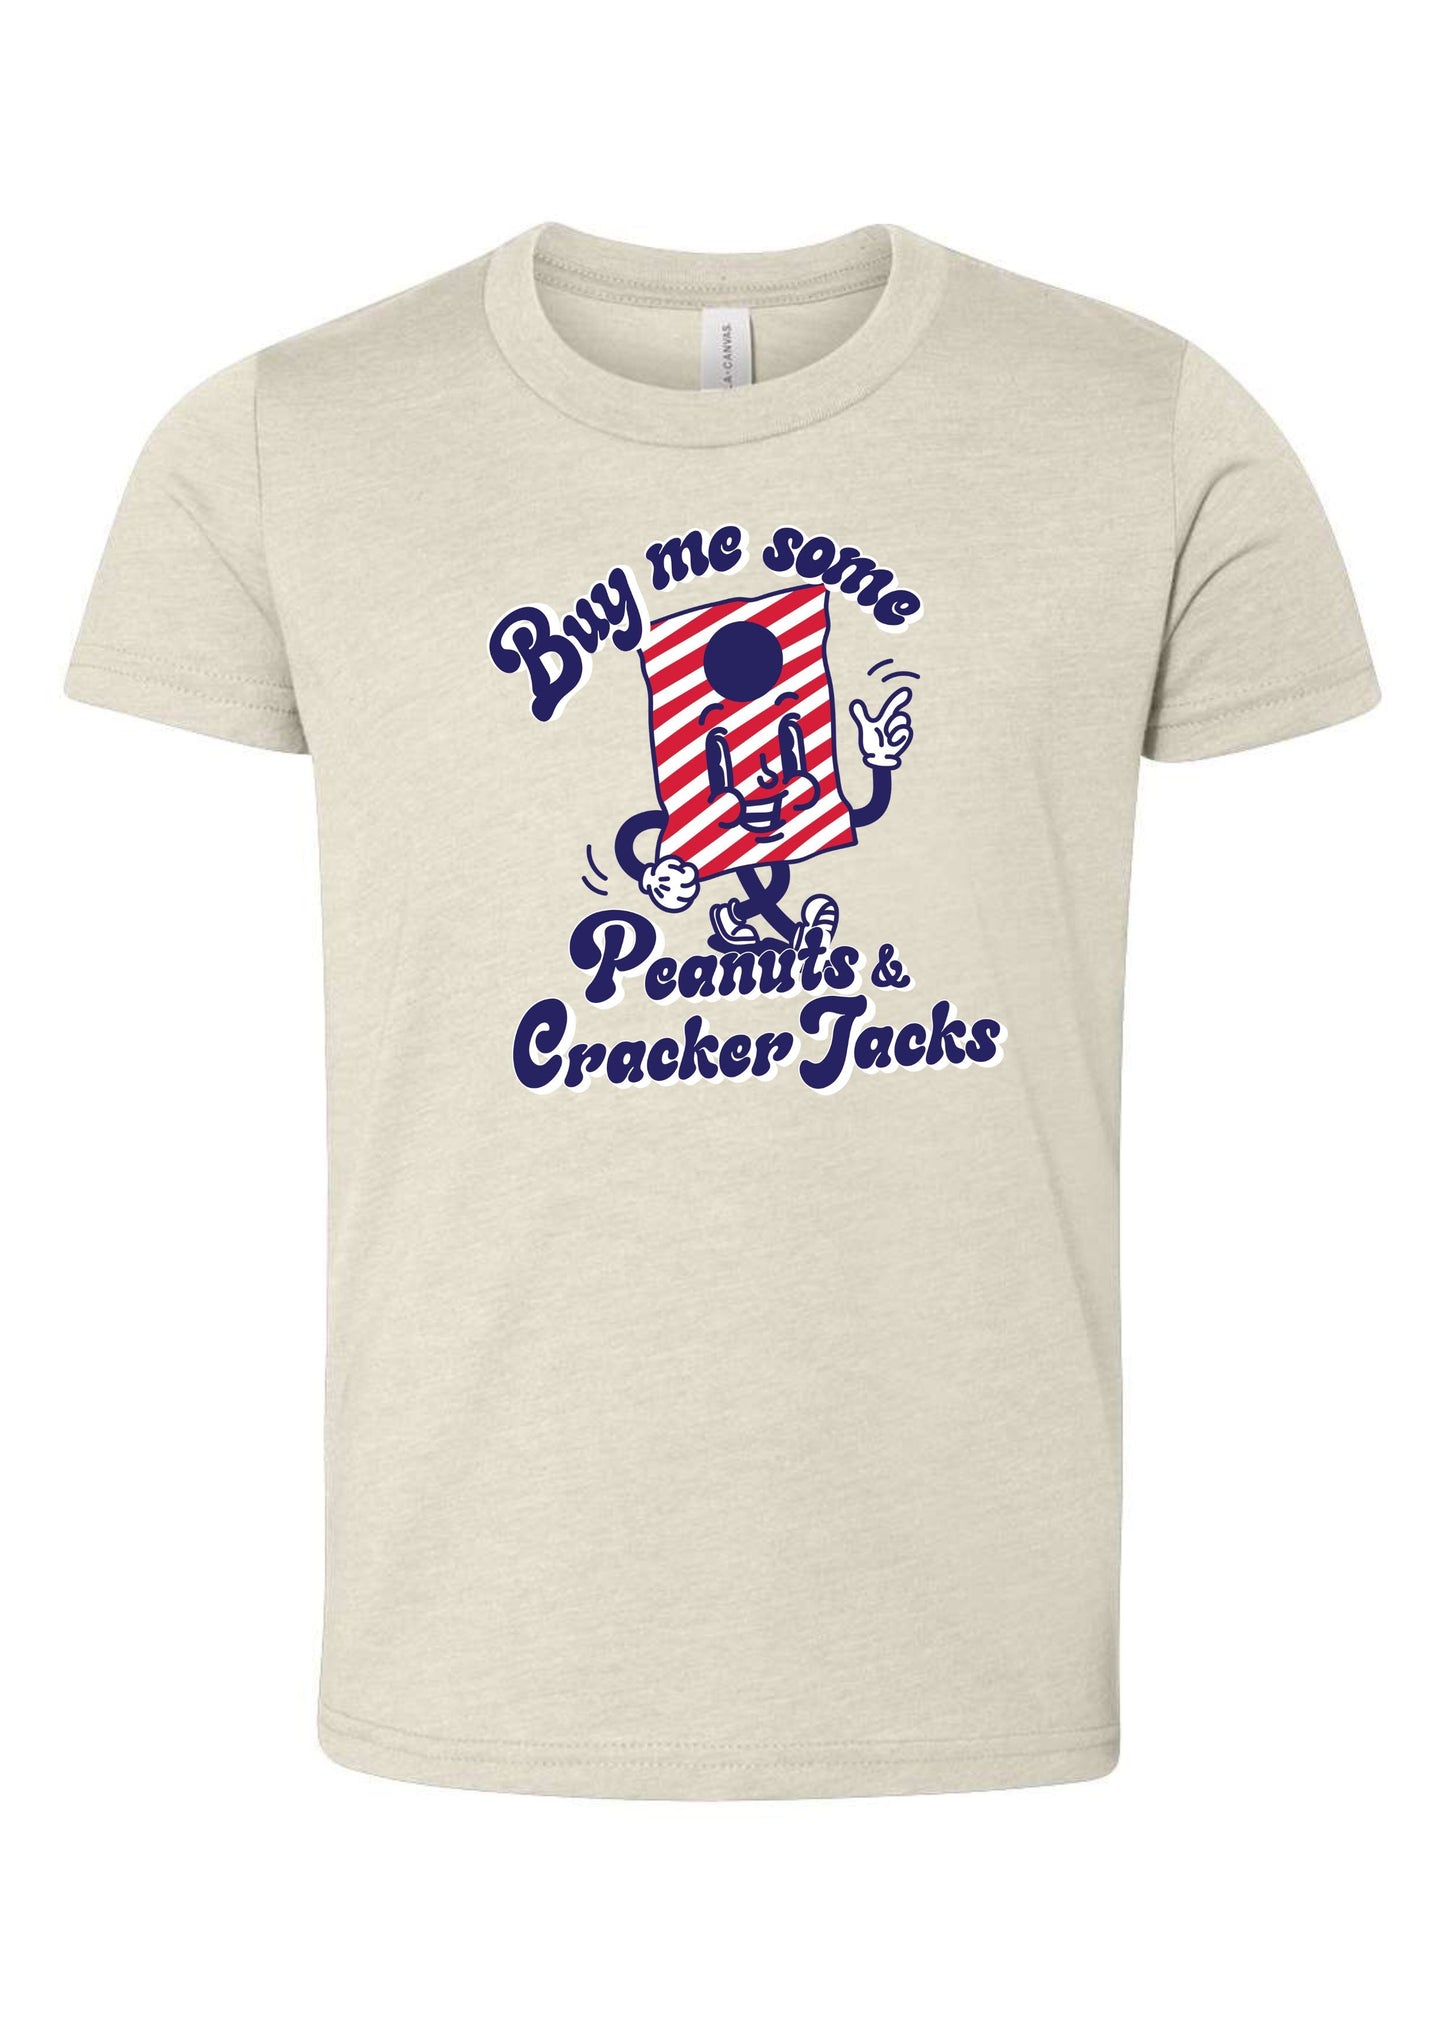 Peanuts + Cracker Jacks | Kids Tee | RTS-Sister Shirts-Sister Shirts, Cute & Custom Tees for Mama & Littles in Trussville, Alabama.